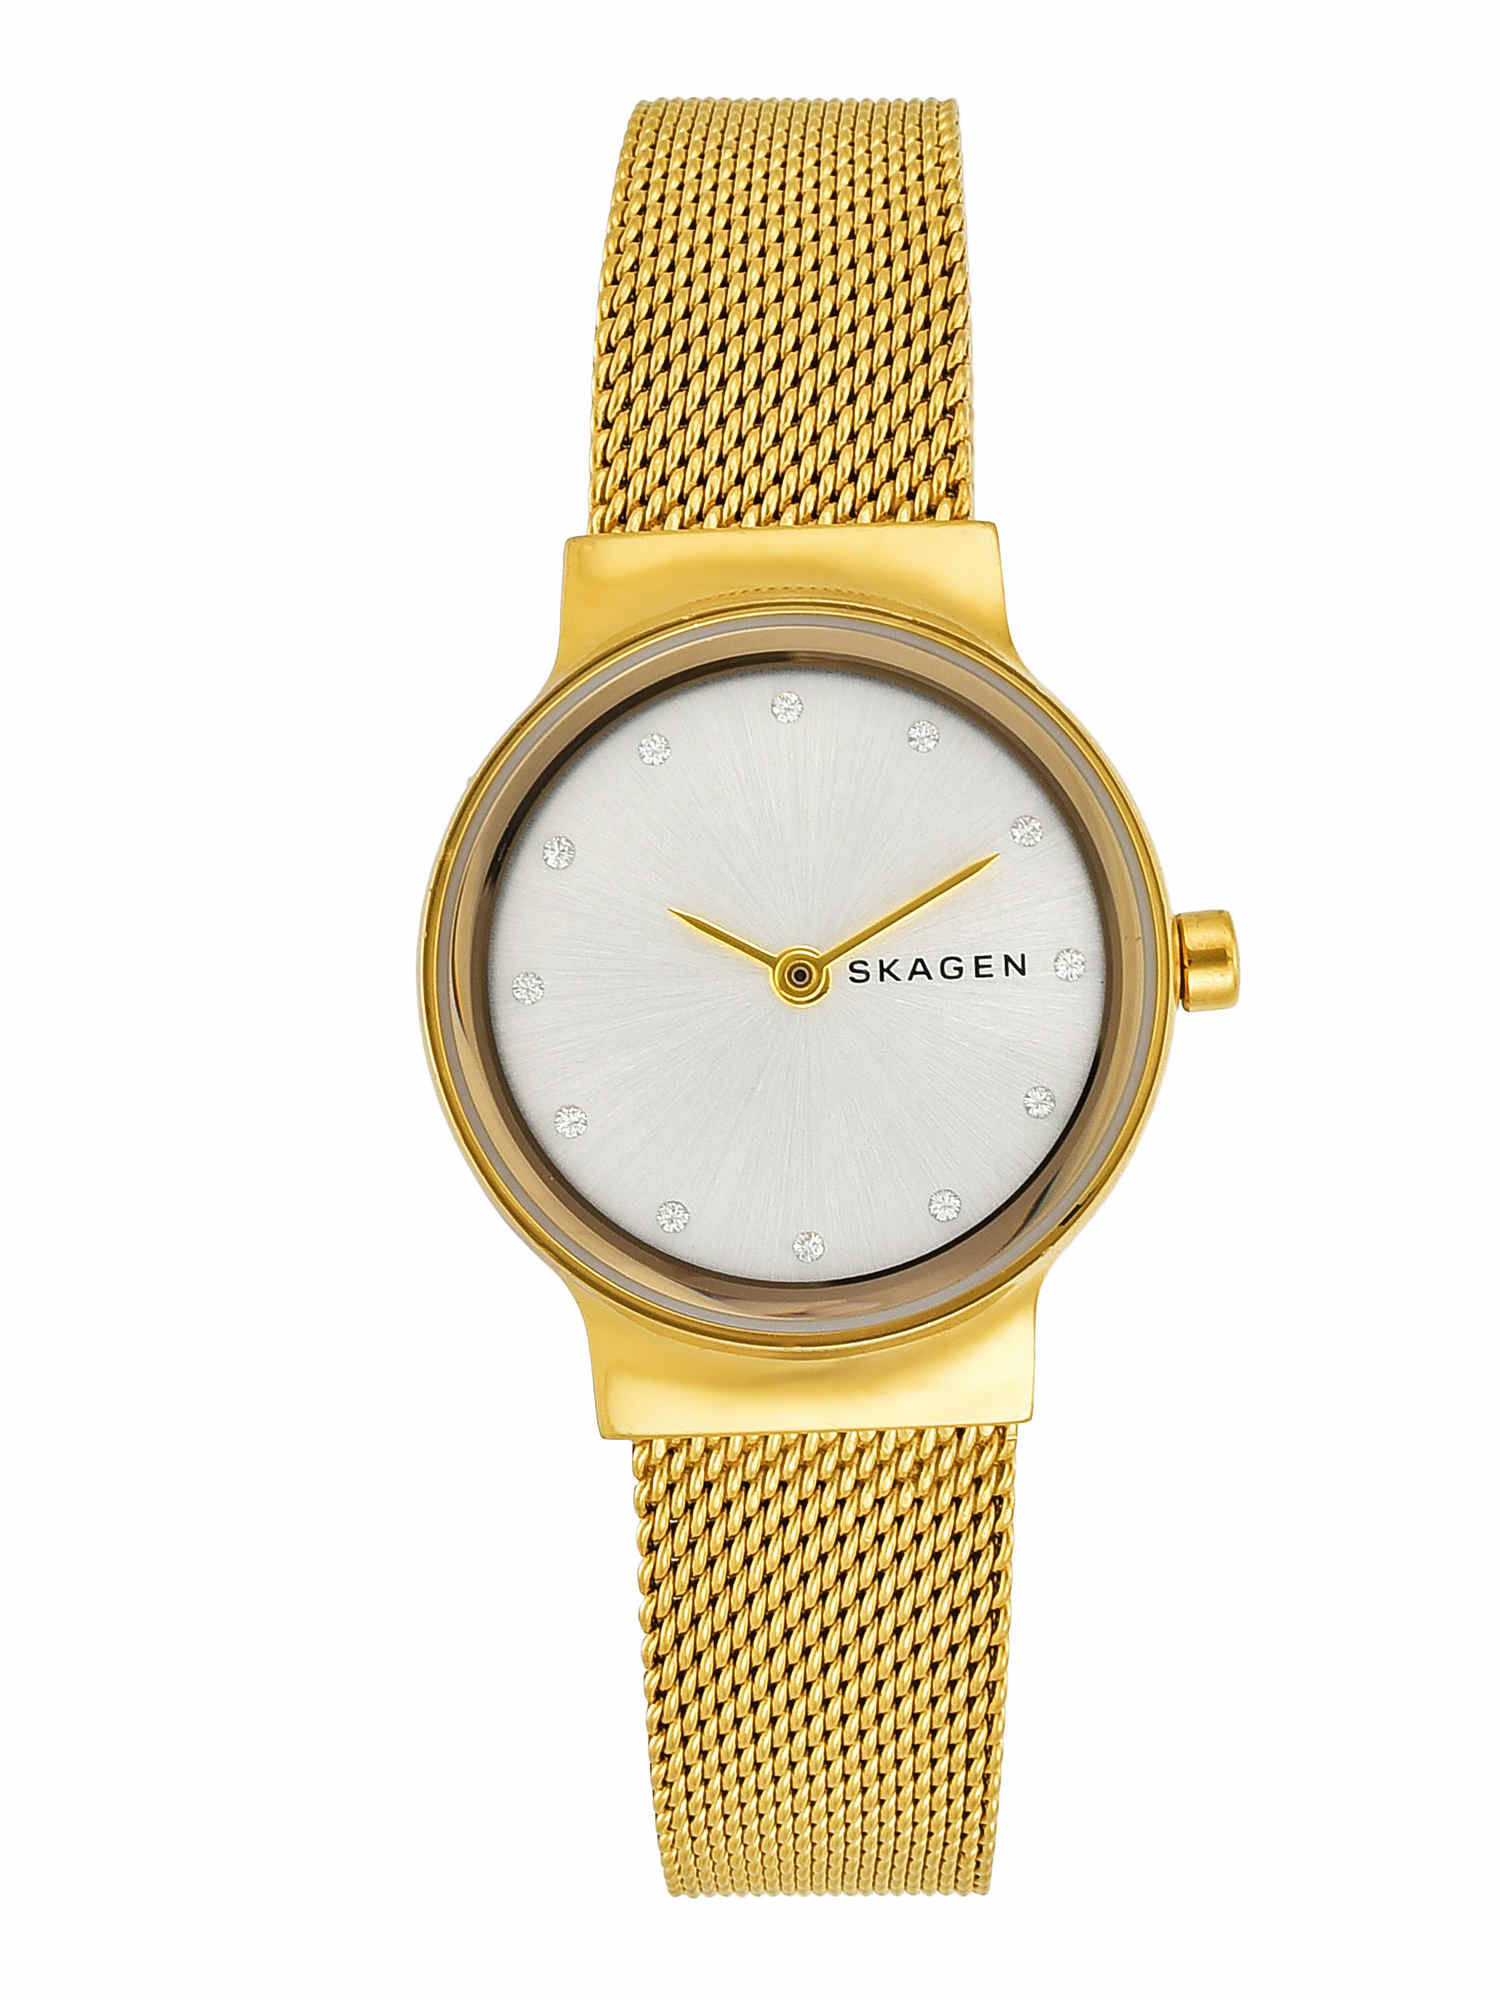 Skagen SKW2717 Freja Gold Watch For Women: Buy Skagen SKW2717